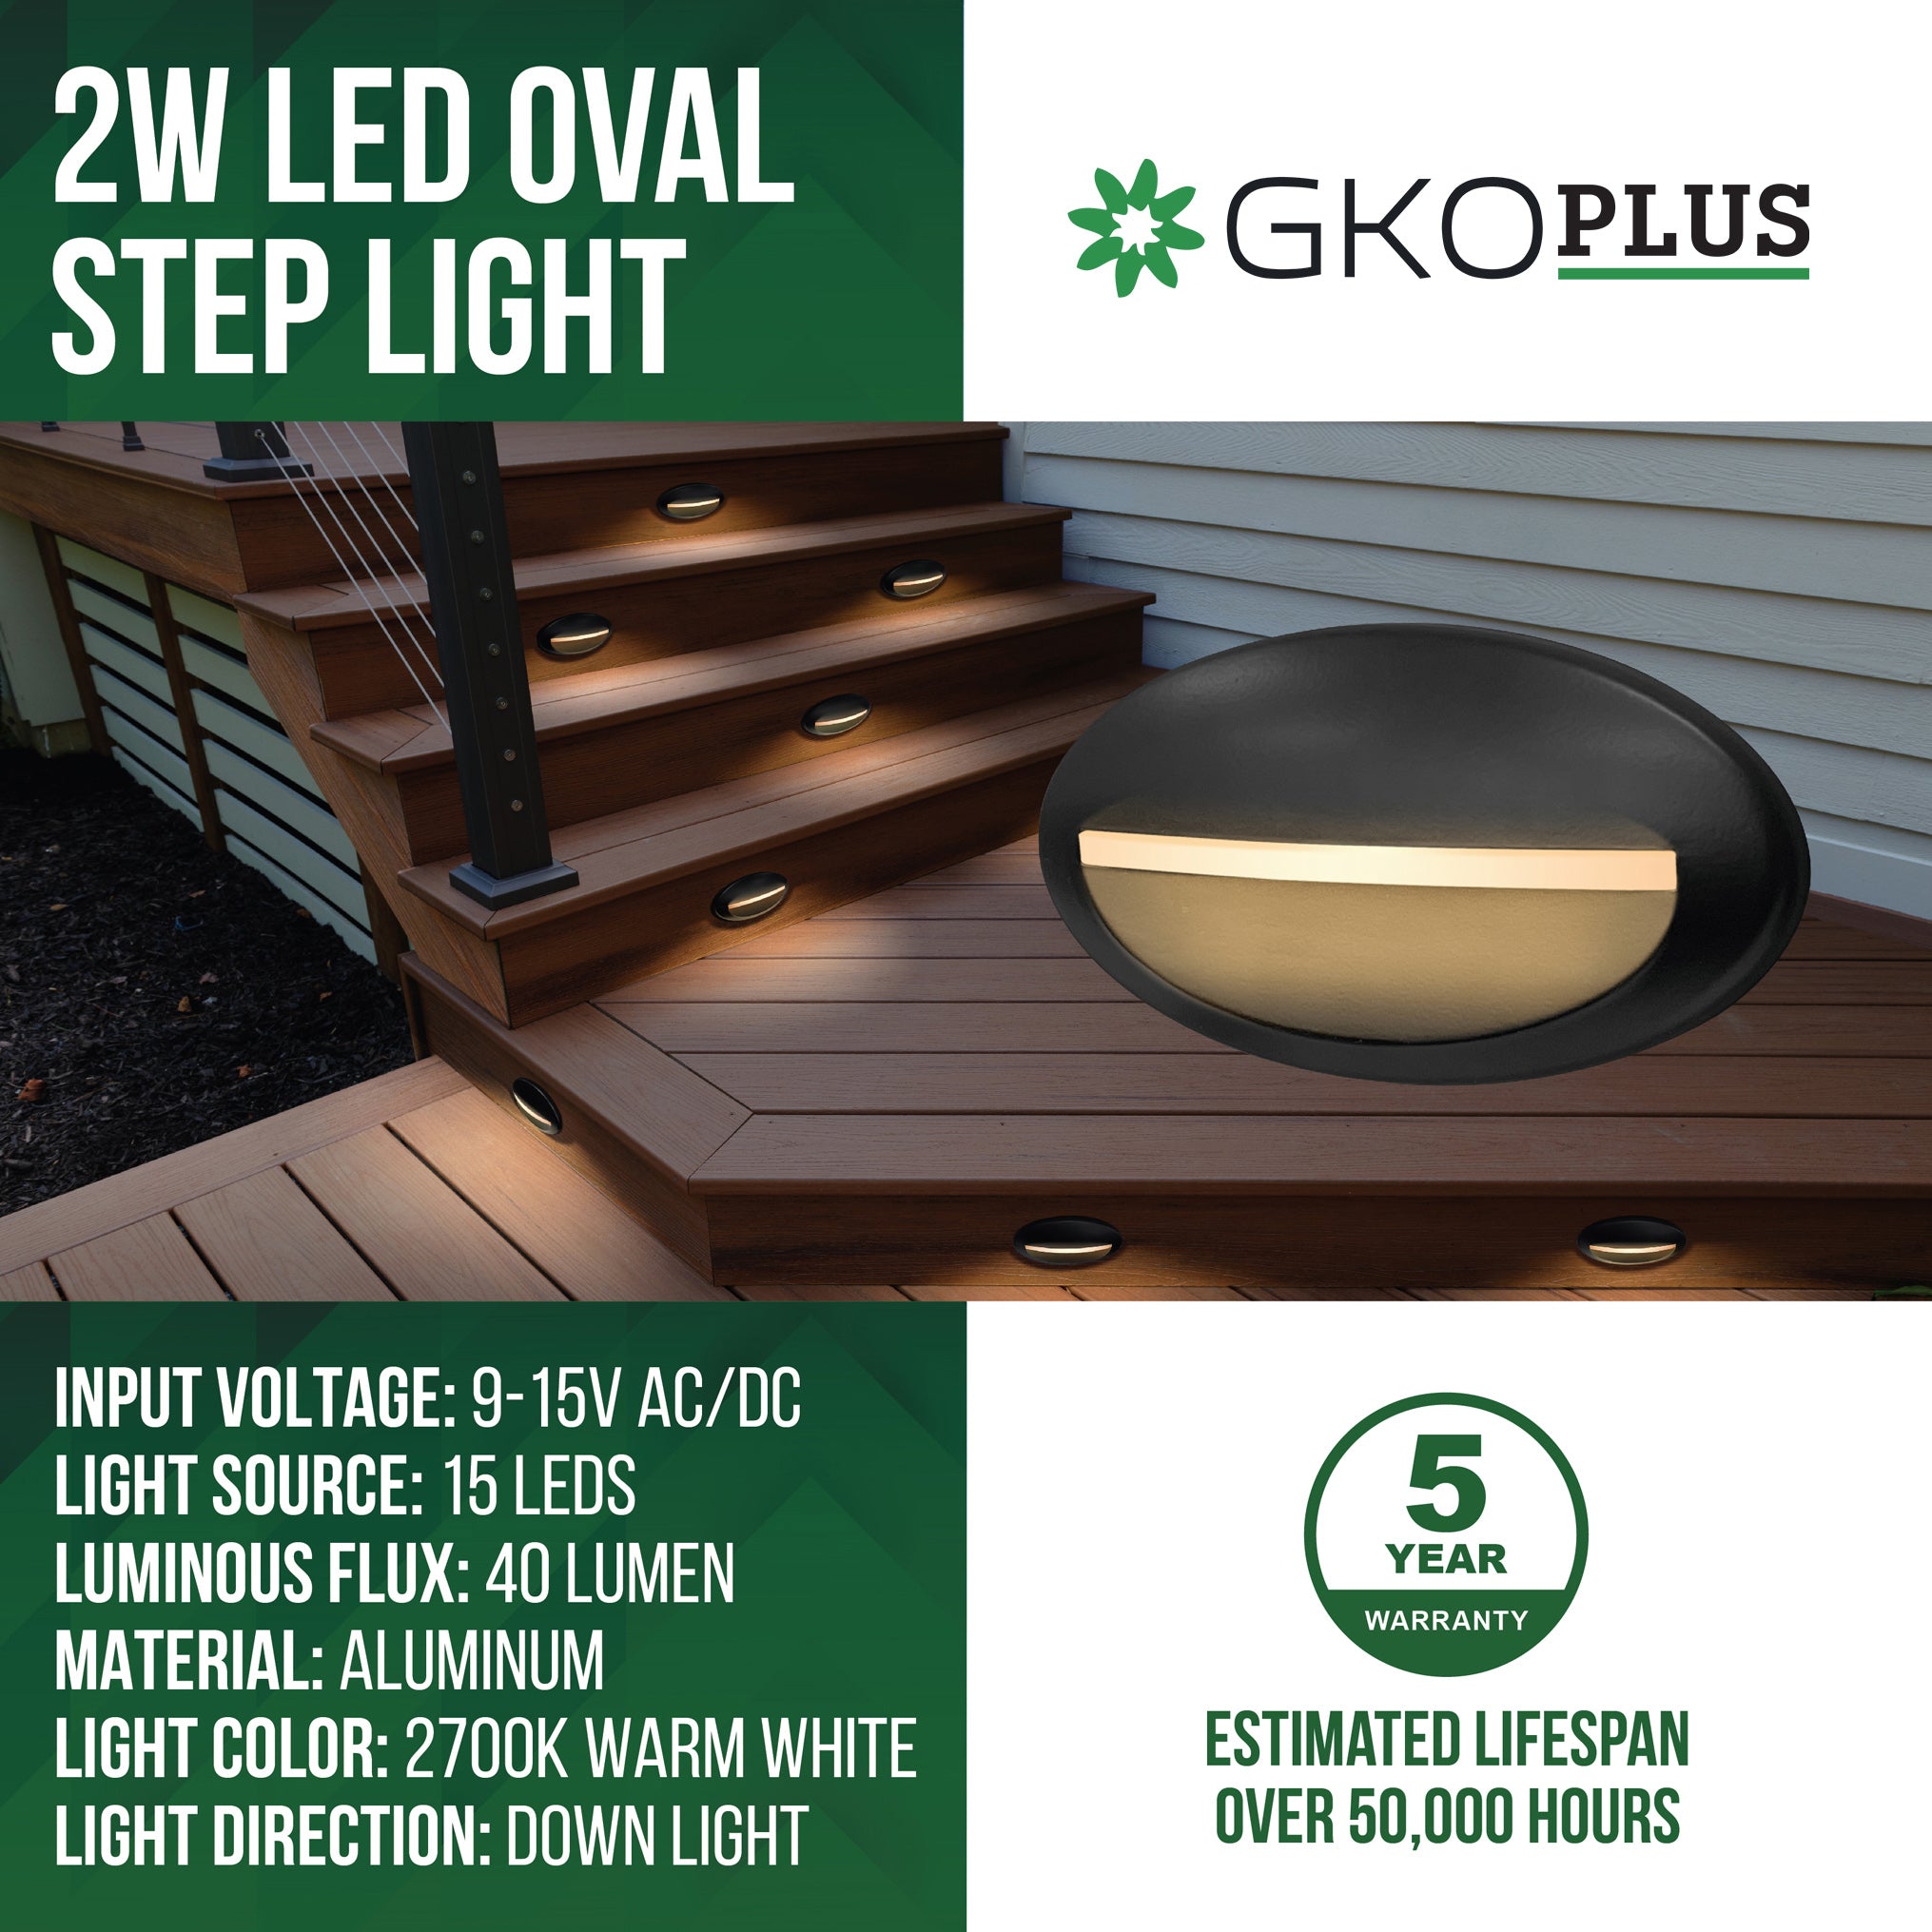 Low Voltage Oval Step Light, 9-15V AC/DC, 2W, 2700K